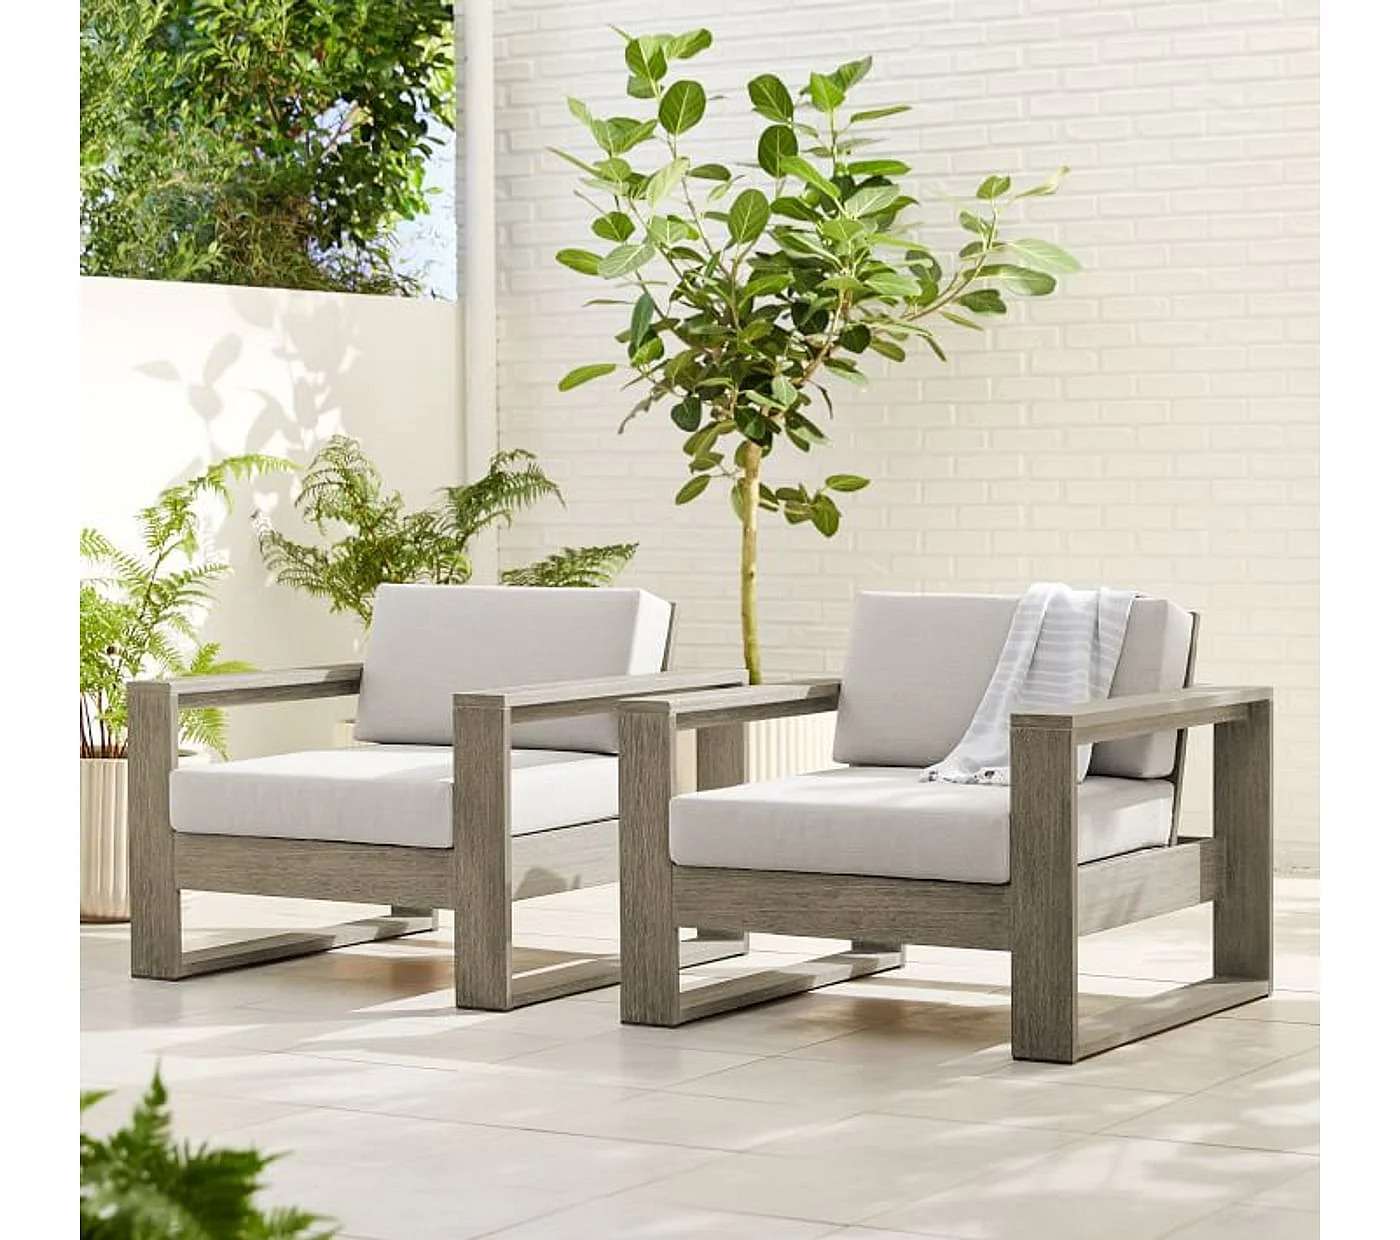 Garden Lounge Chairs